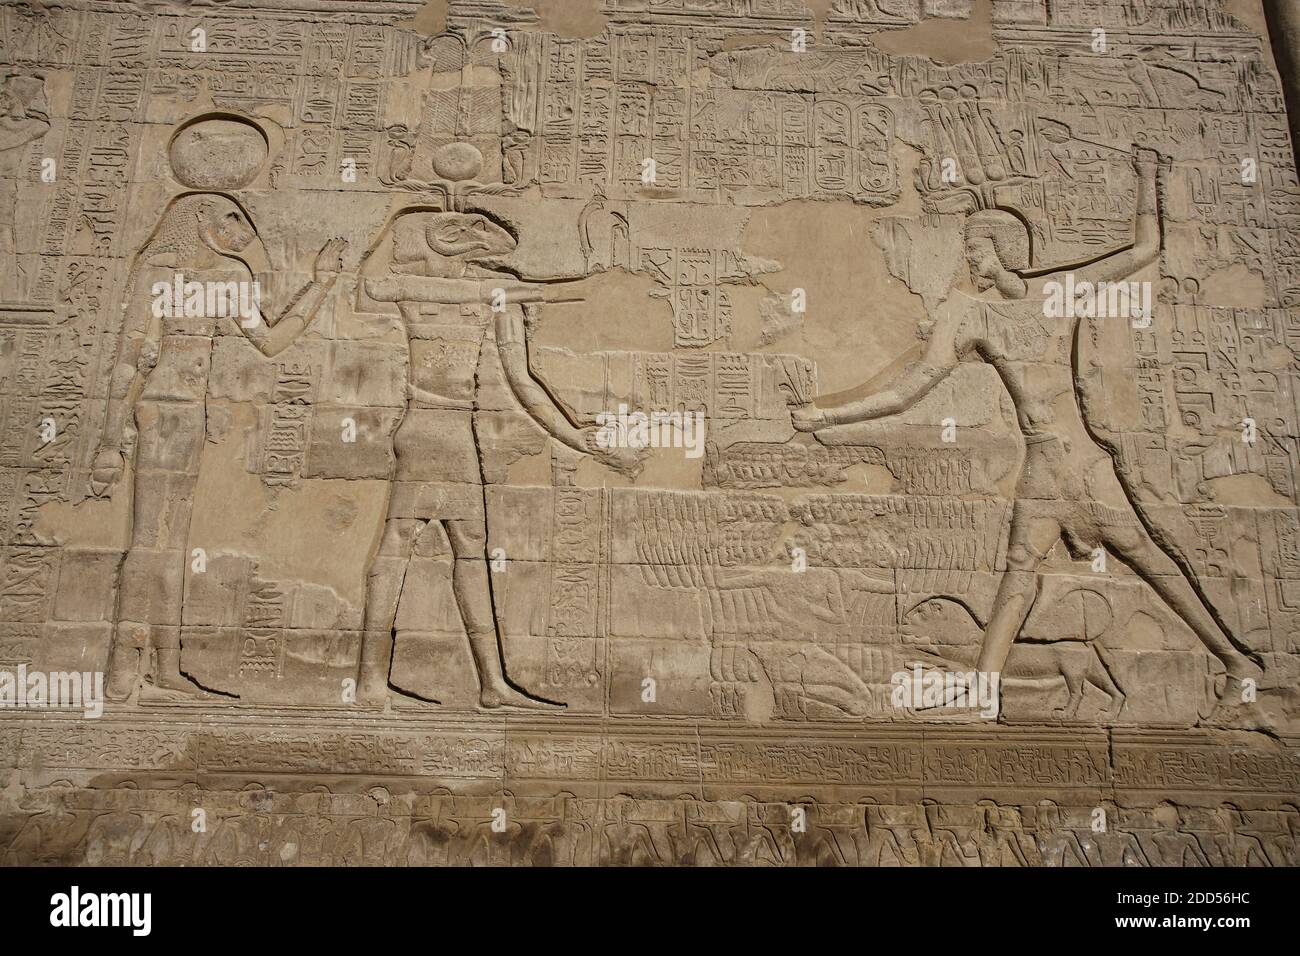 TEMPLE OF KHNUM, EGYPT Stock Photo